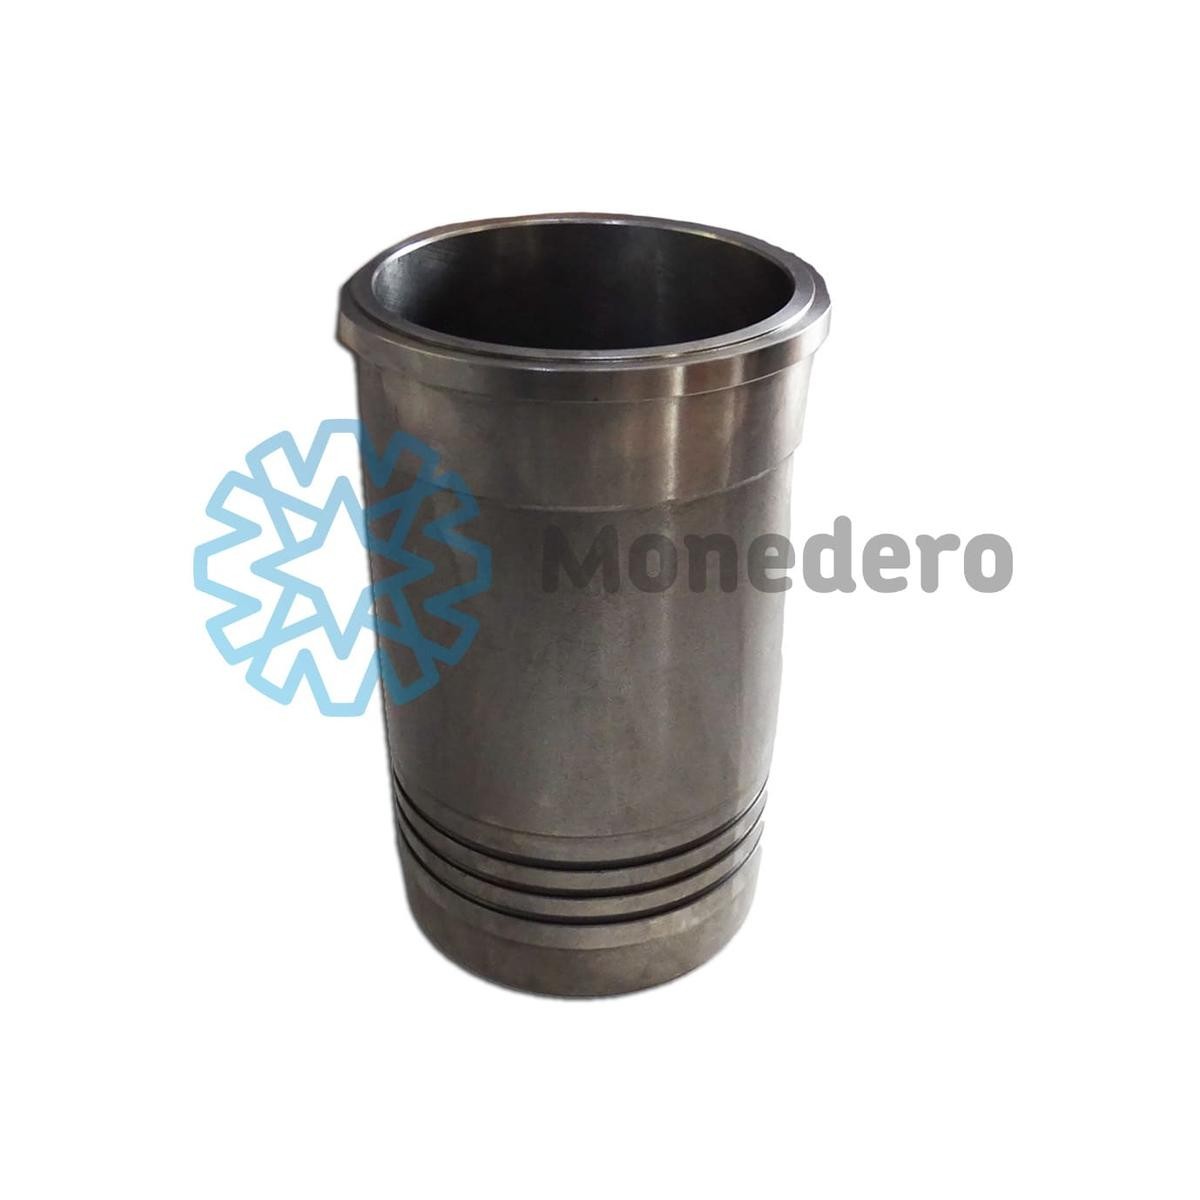 MONEDERO 30011300003 Cylinder Sleeve 500337911